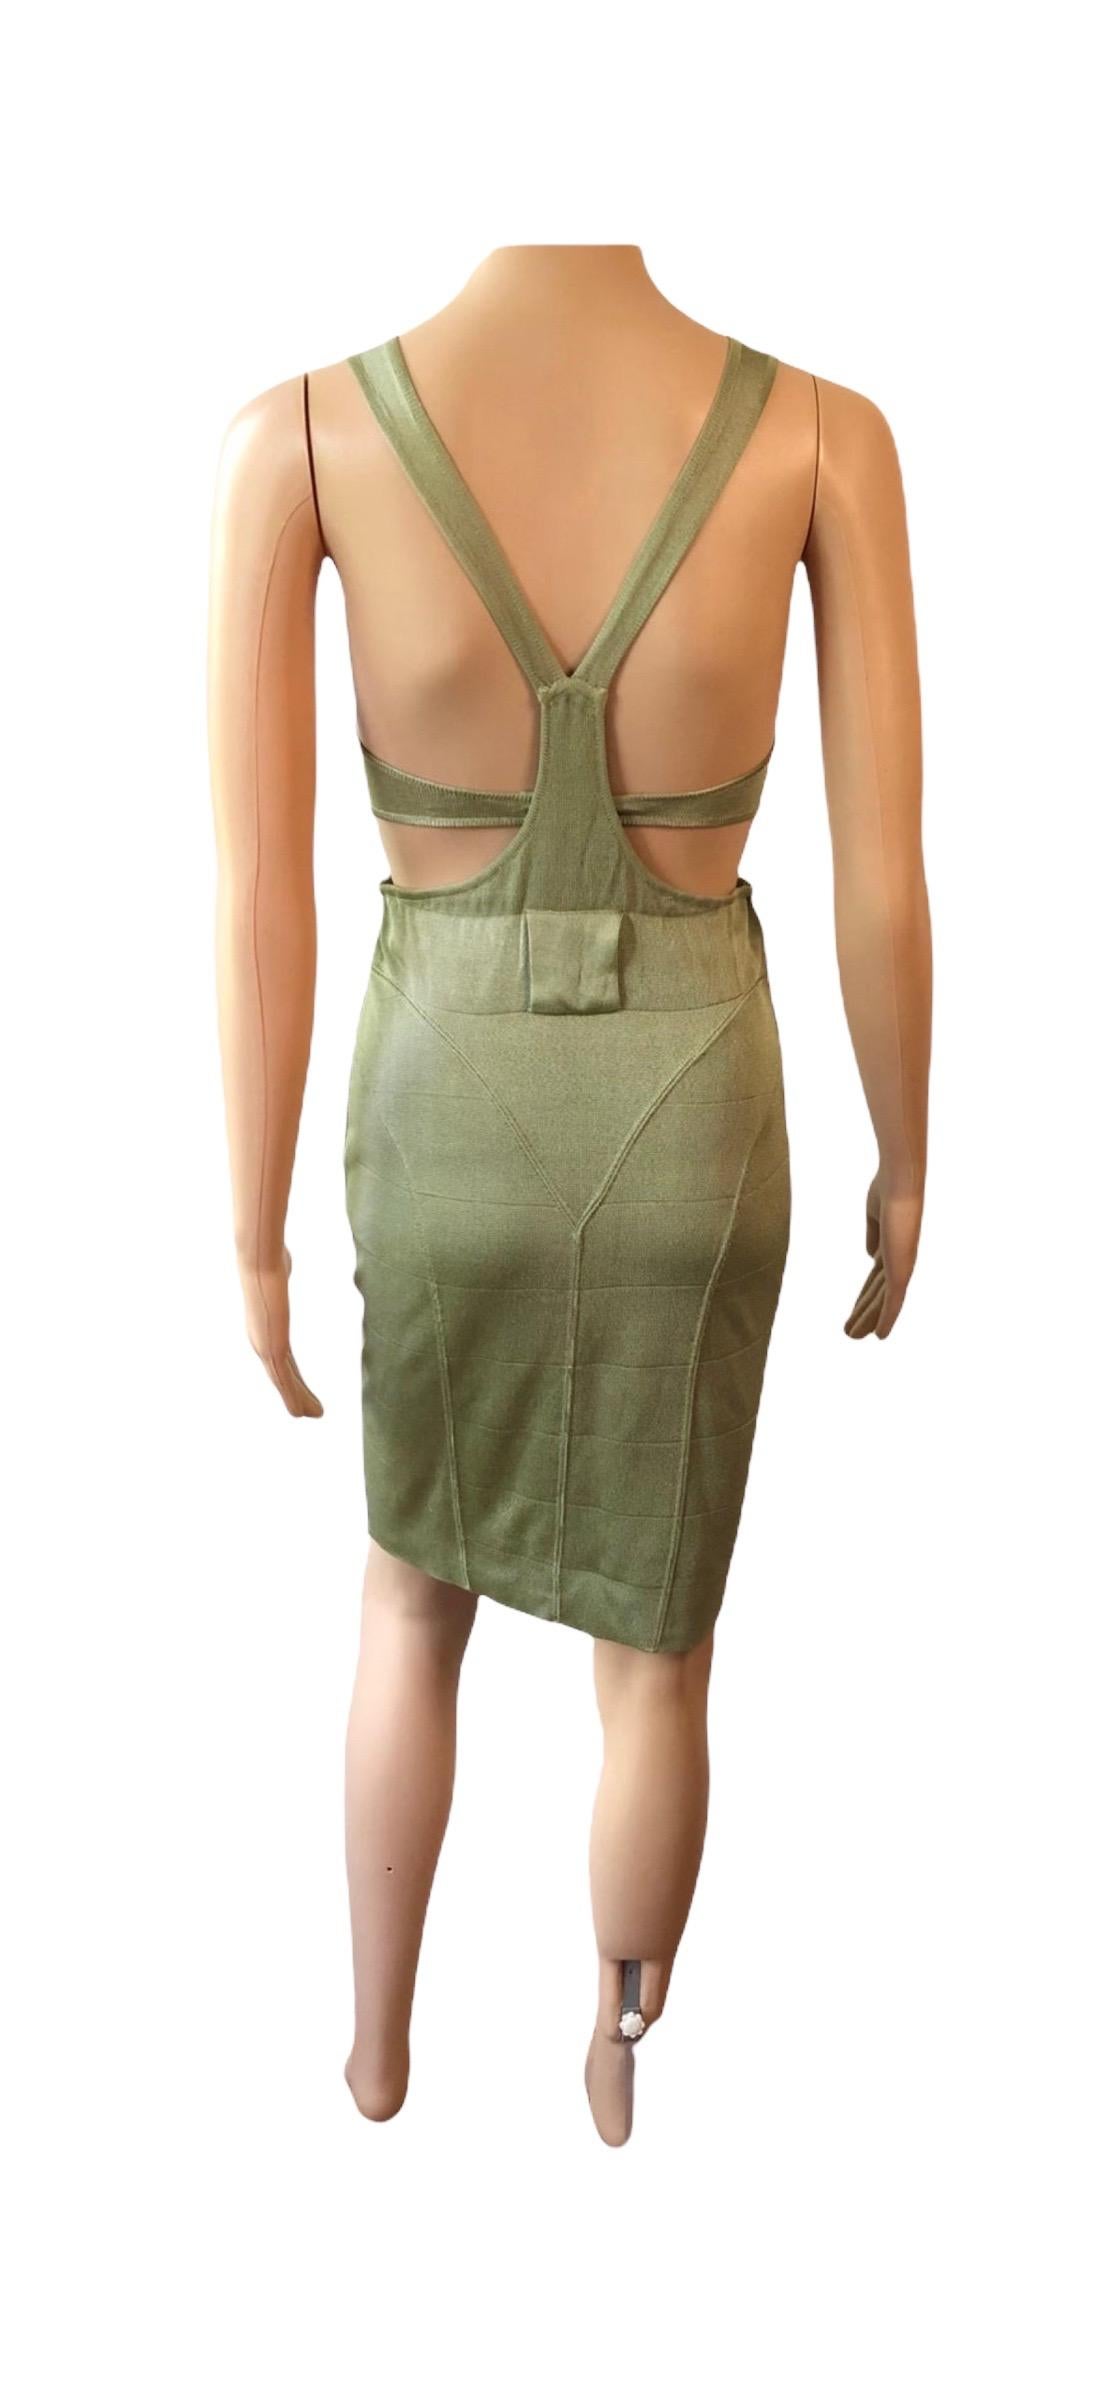 Azzedine Alaia S/S 1985 Vintage Plunged Cutout Bodycon Green Dress 6